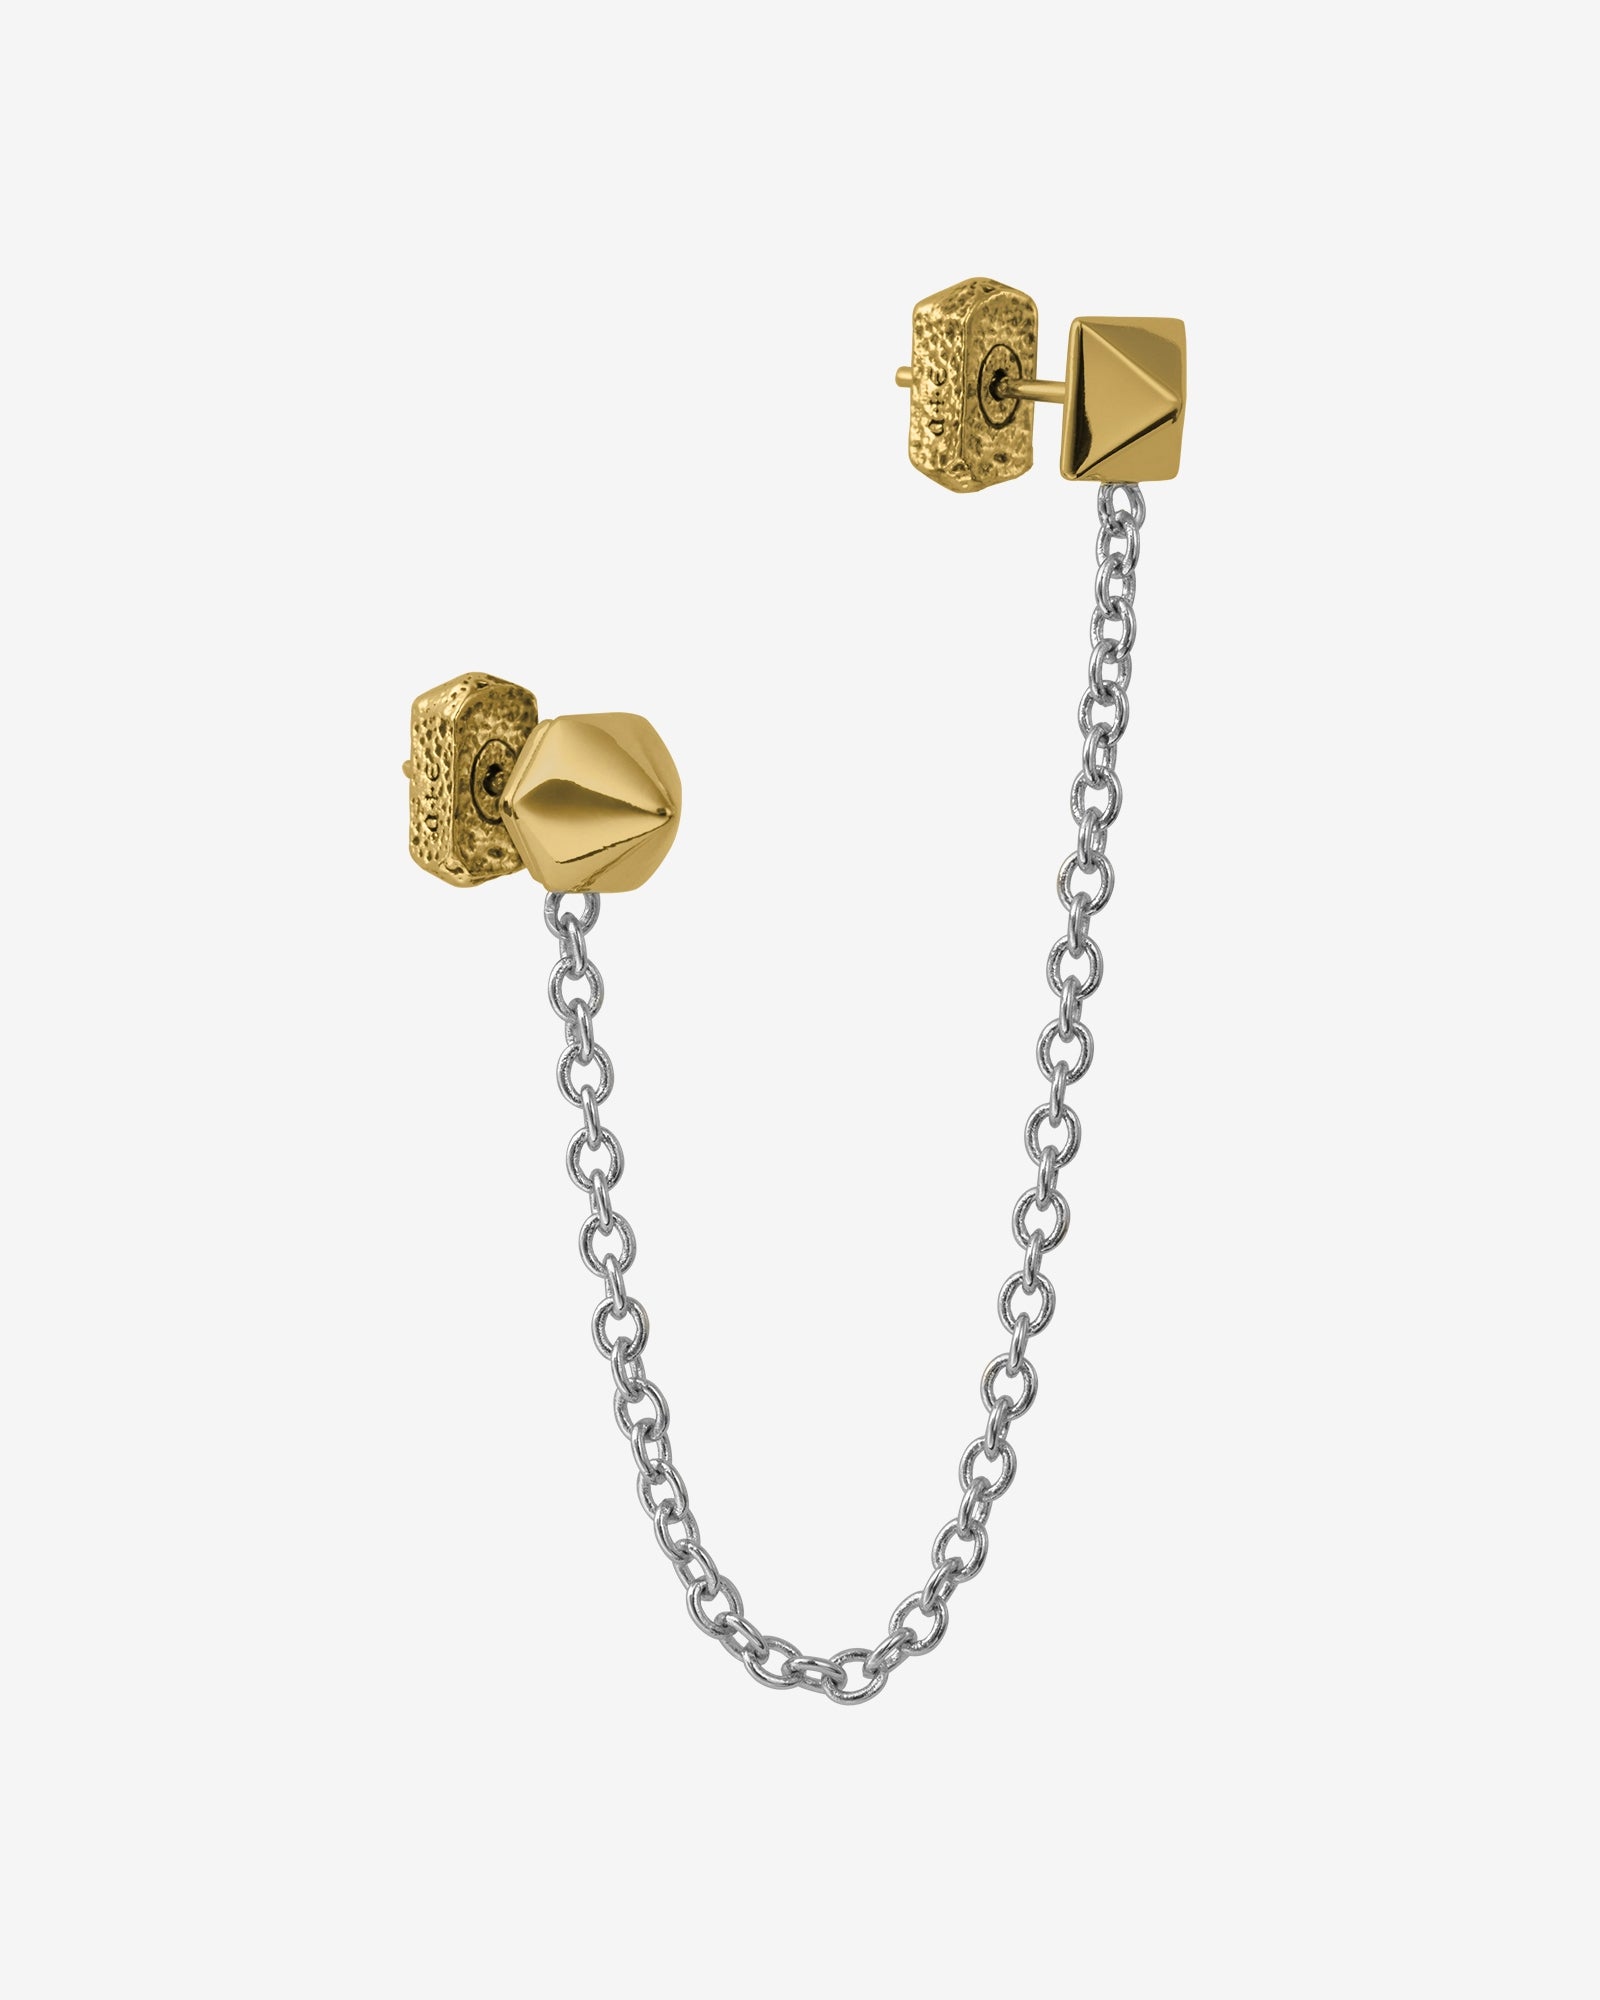 Gold layered Earring Chain by Niscka-Gold Chain Earrings Design